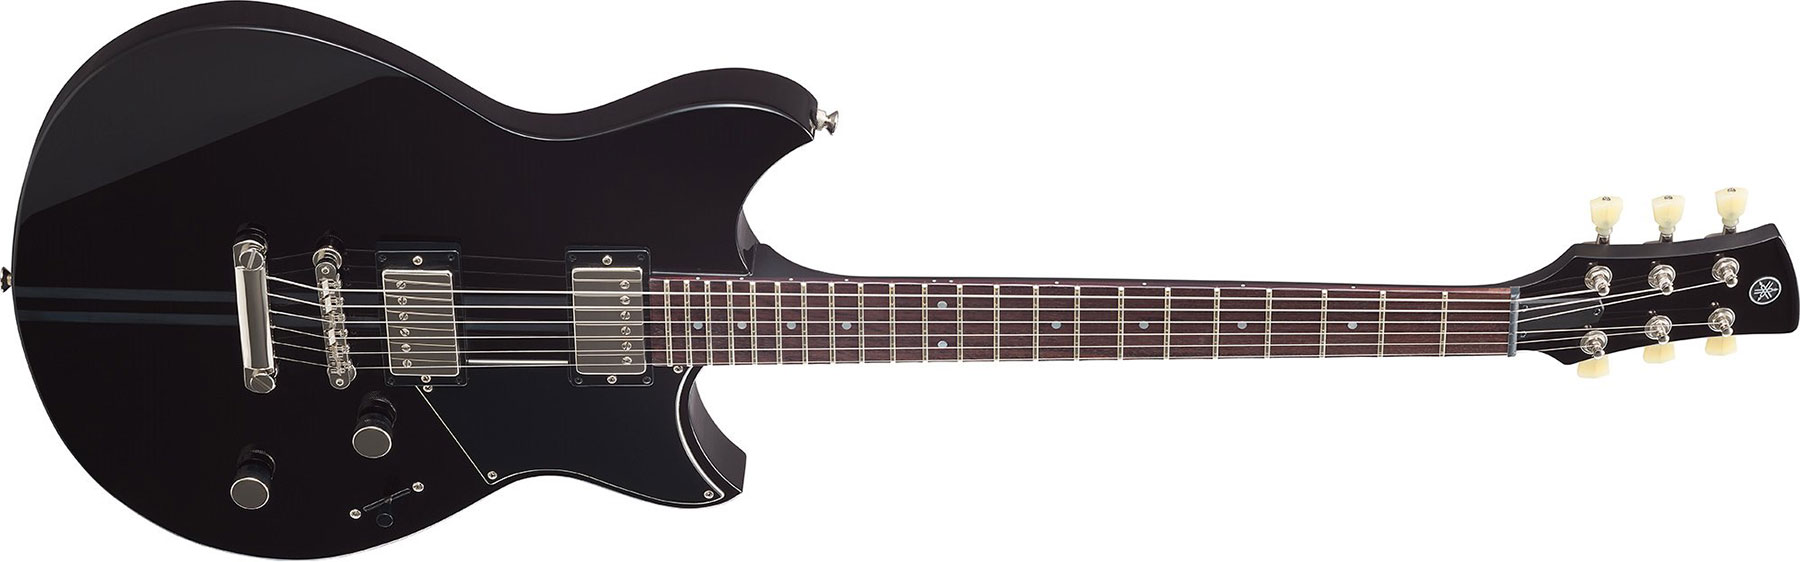 Yamaha Rse20 Revstar Element Hh Ht Rw - Black - Double cut electric guitar - Variation 2